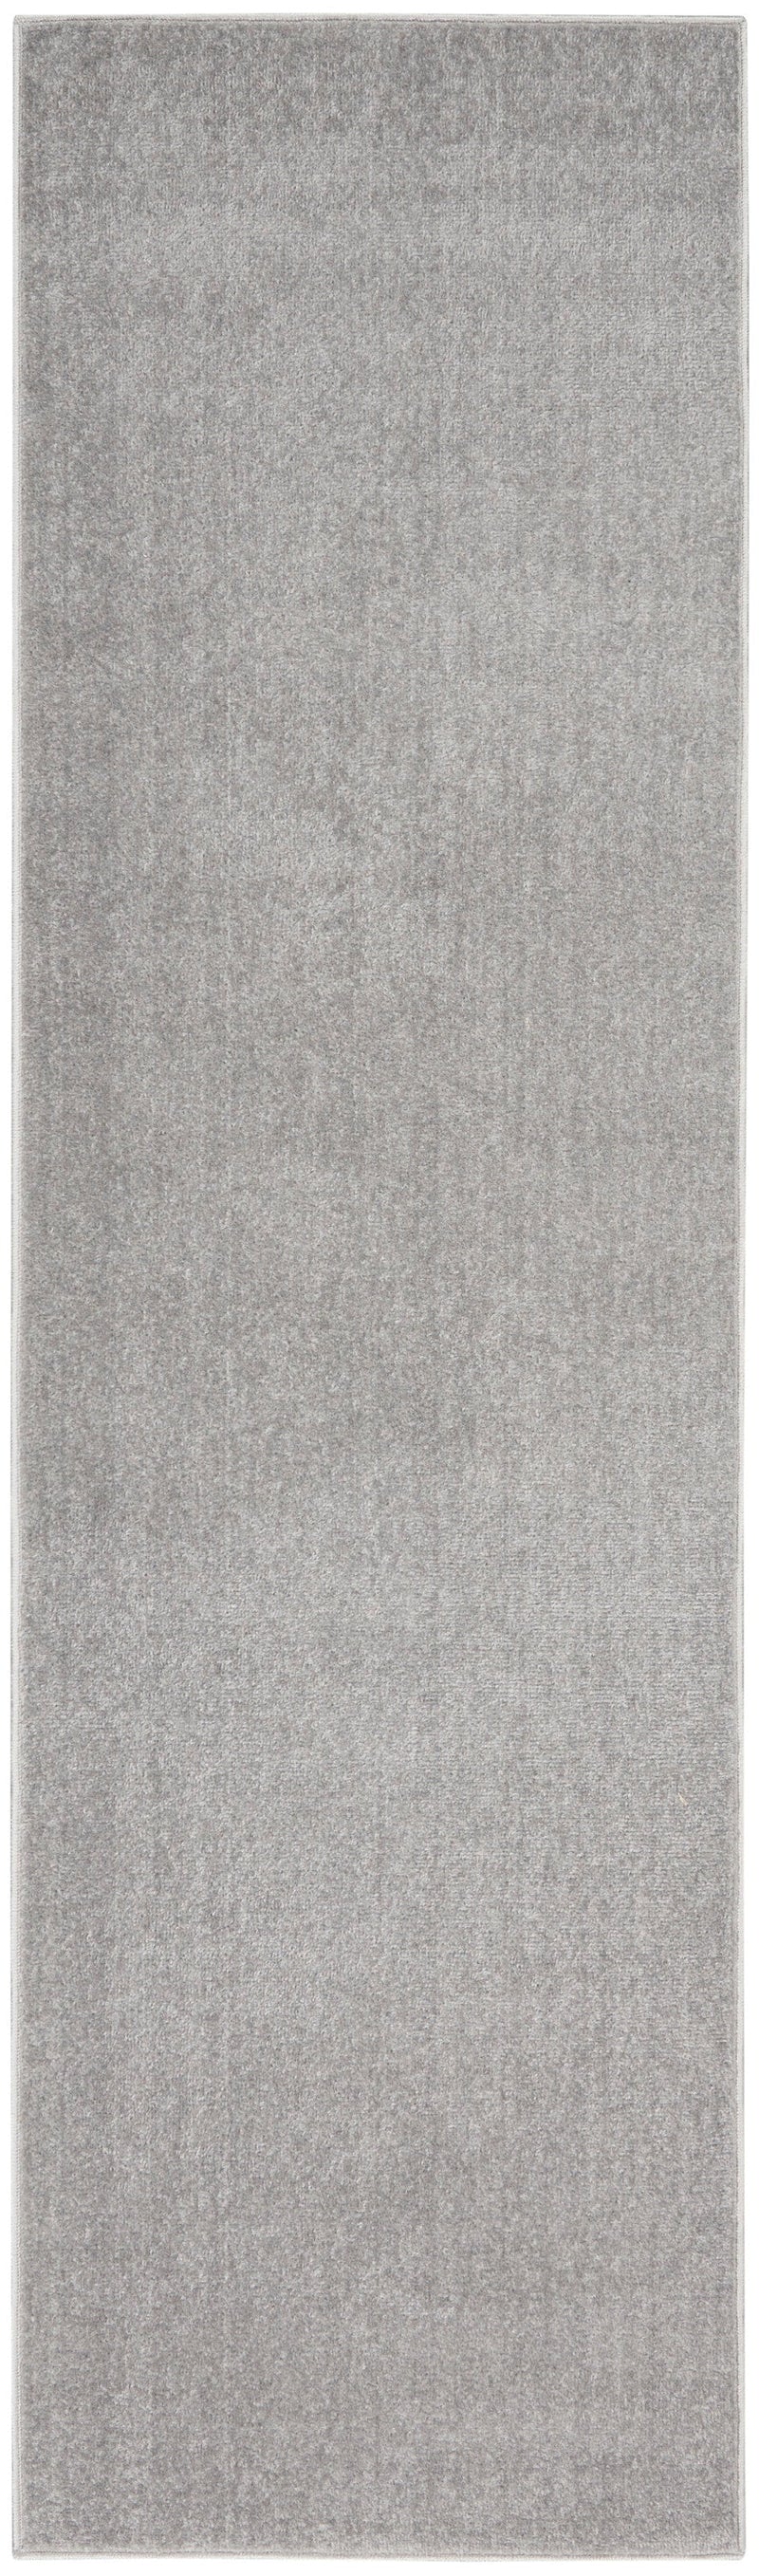 media image for nourison essentials silver grey rug by nourison 99446062369 redo 4 269